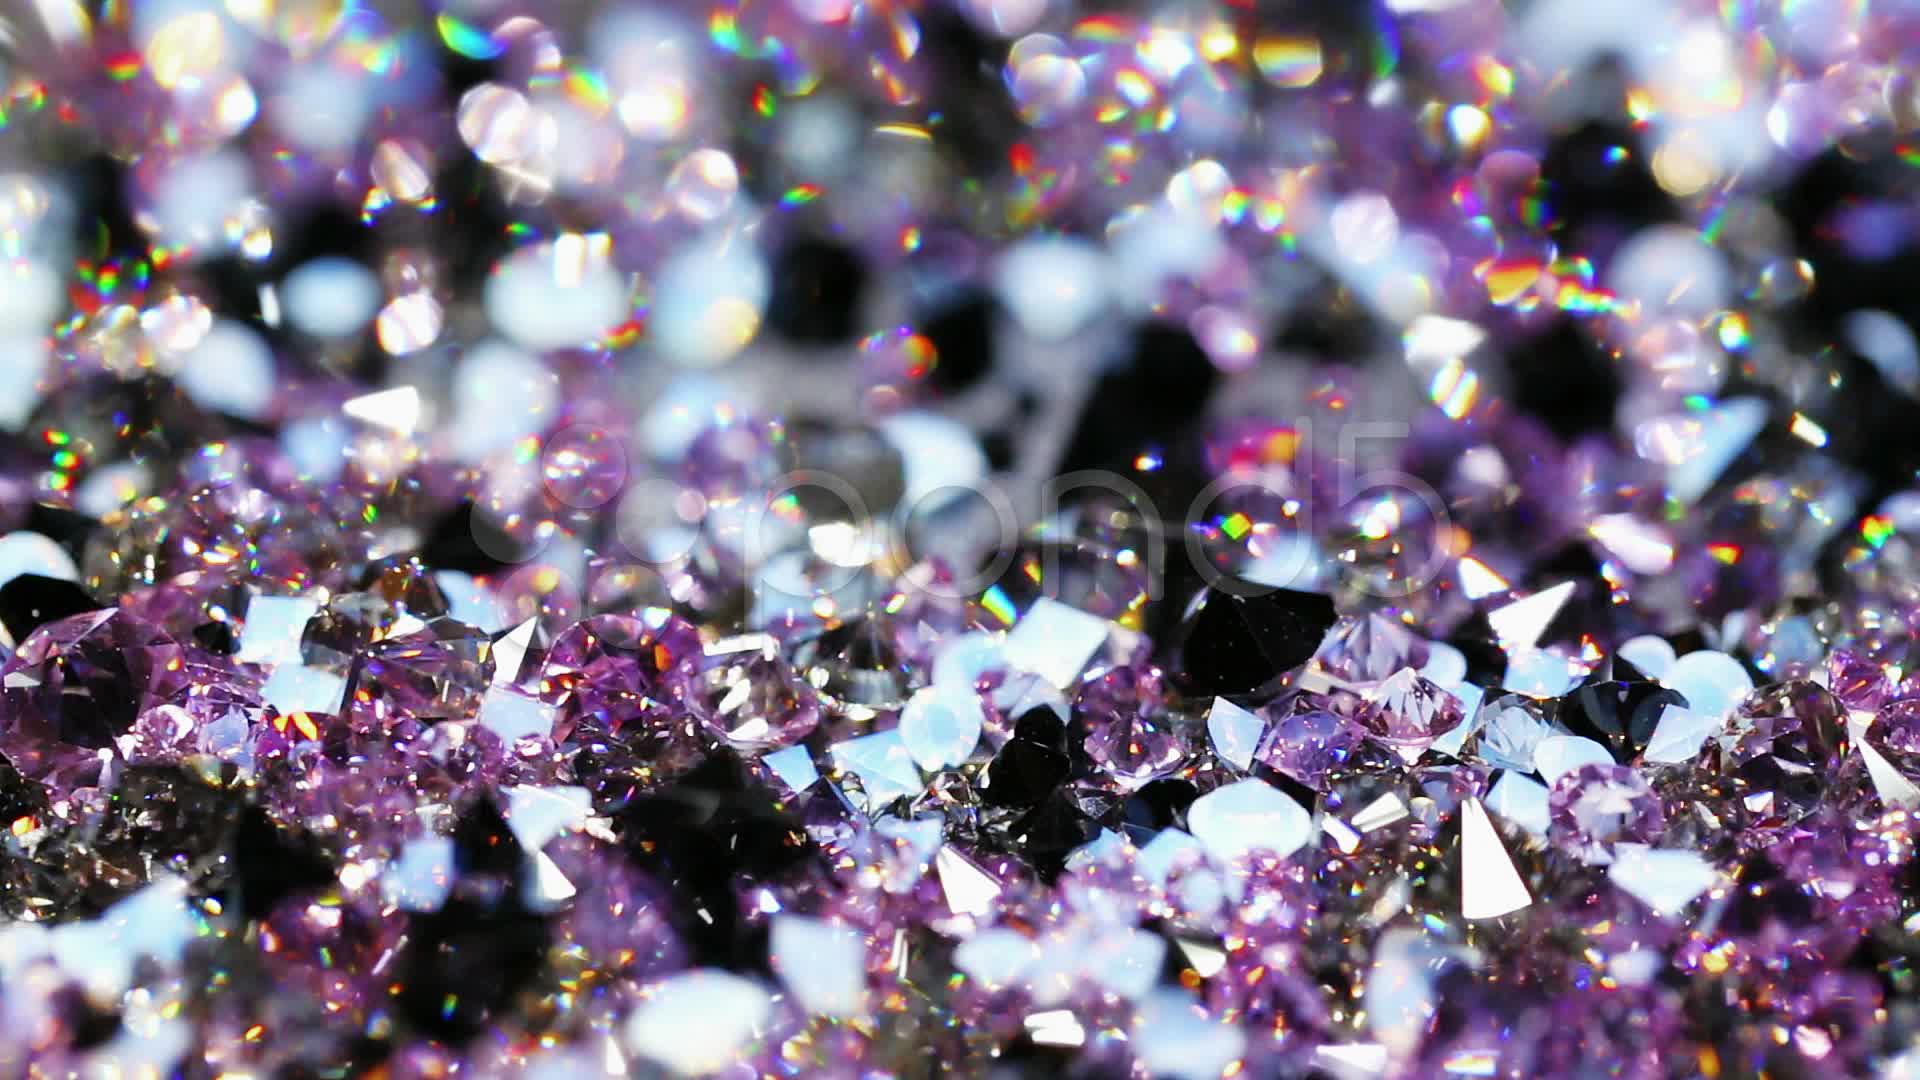 Purple Diamond Wallpaper